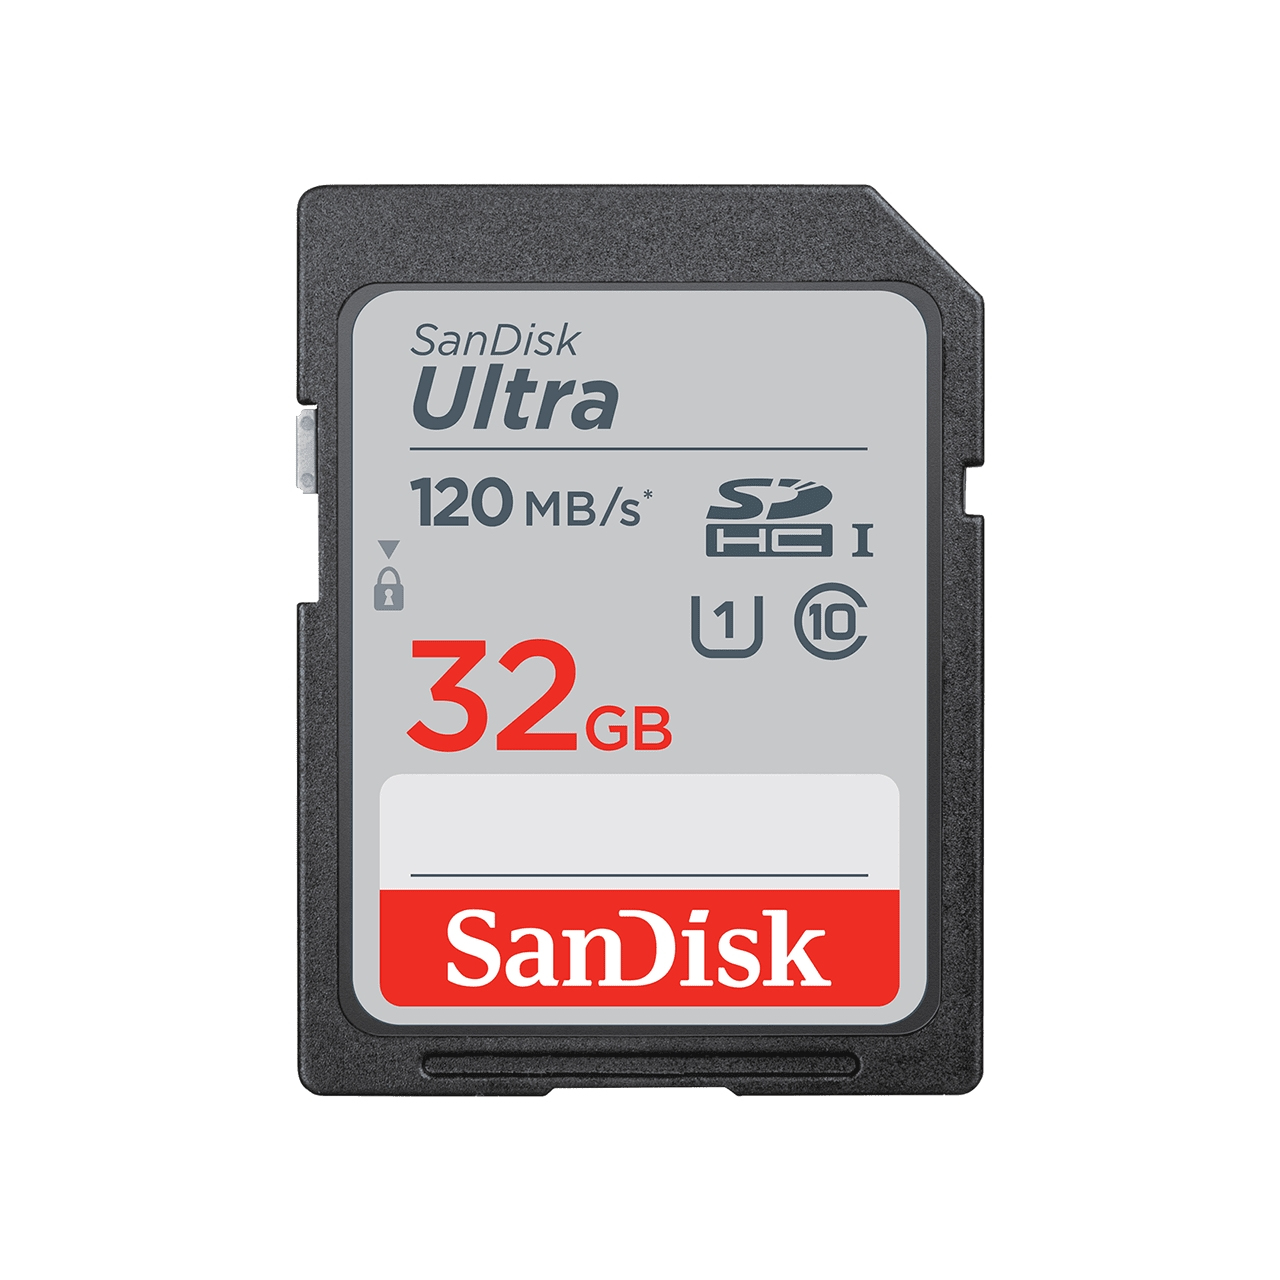 Sandisk sdhc ultra 32gb 120mb/s CL10